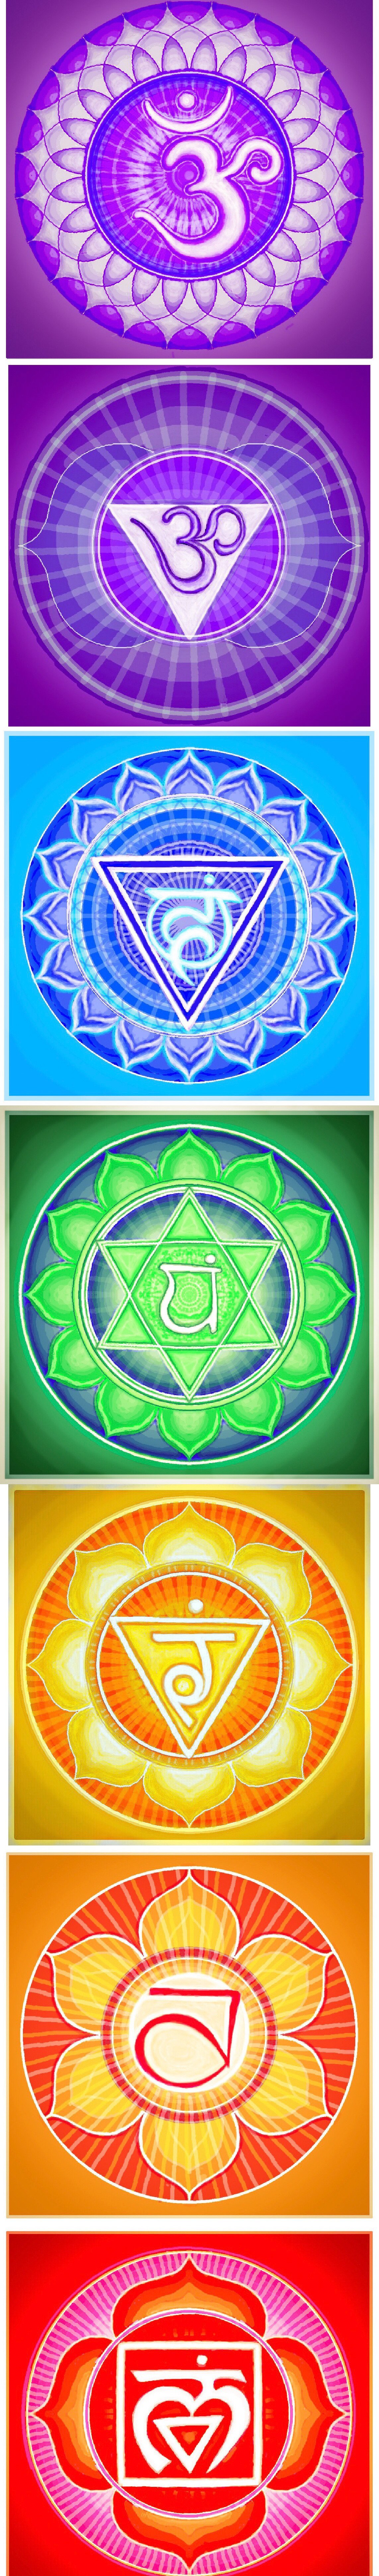 Patricia Leone: 'The Seven Chakras', 2018 Textile Art, Mandala. The seven chakras, in the yogic tradition, are the seven subtle energy centers in the body.  The mandalas, called yantras, symbolize each chakra, from top to bottom Sahashrara, Ajna, Vishudha, Anahata, Manipura, Svadhistana, and Muhladhara. ...